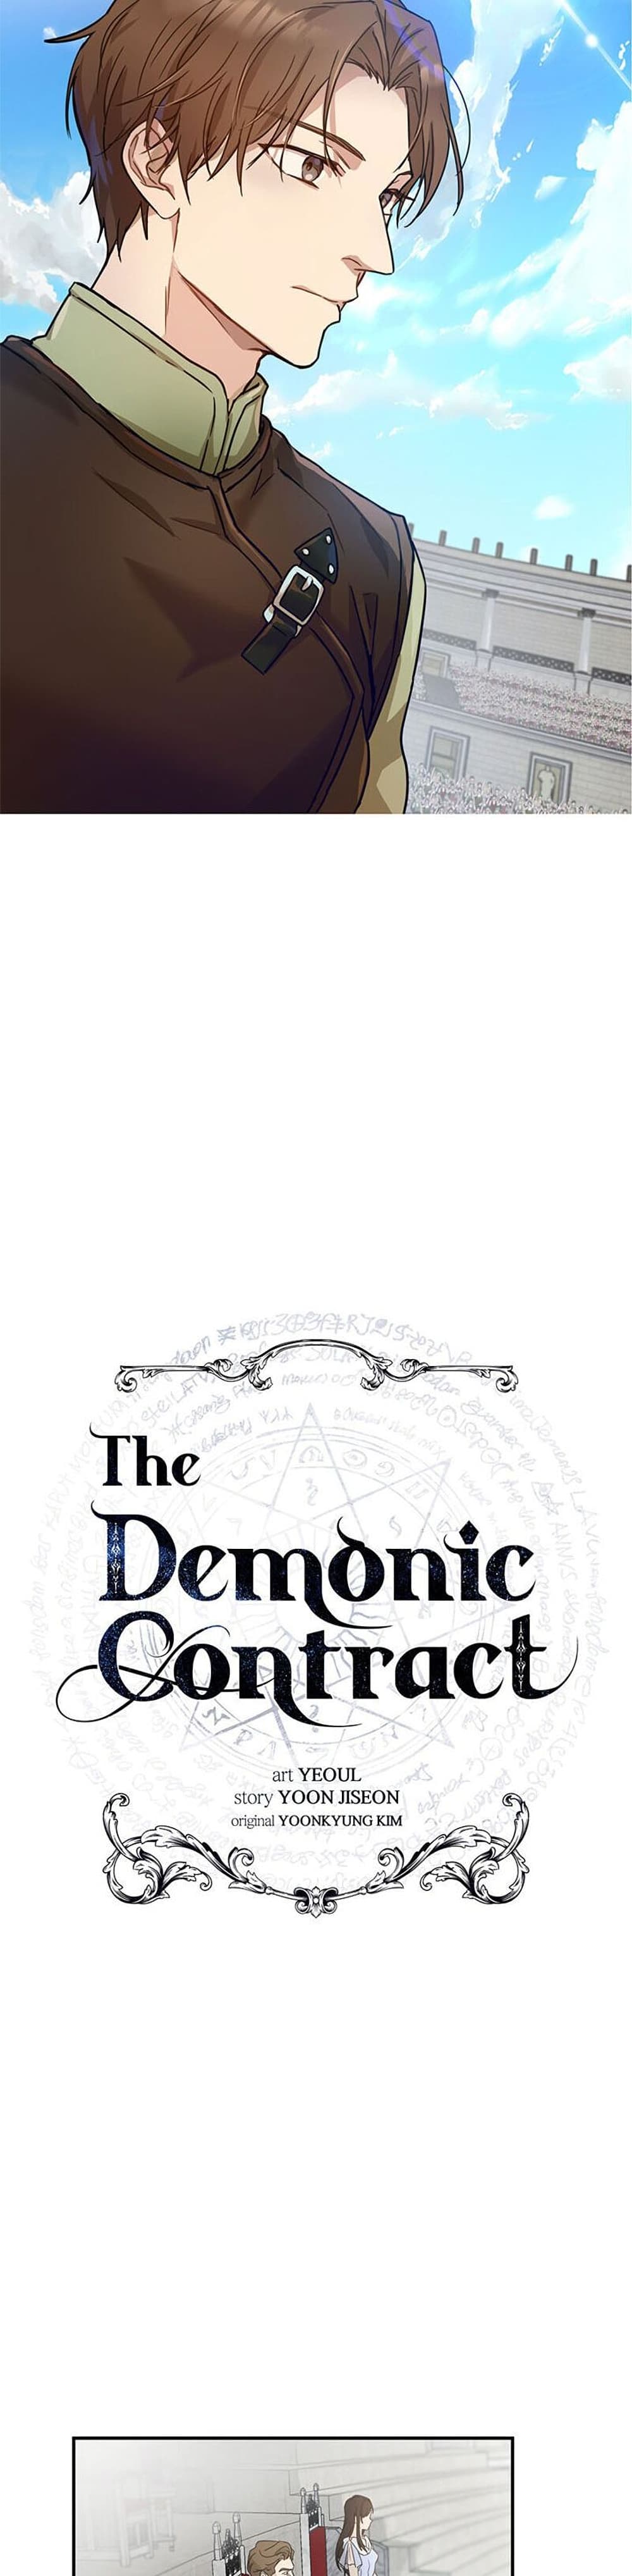 The Demonic Contract 22 04